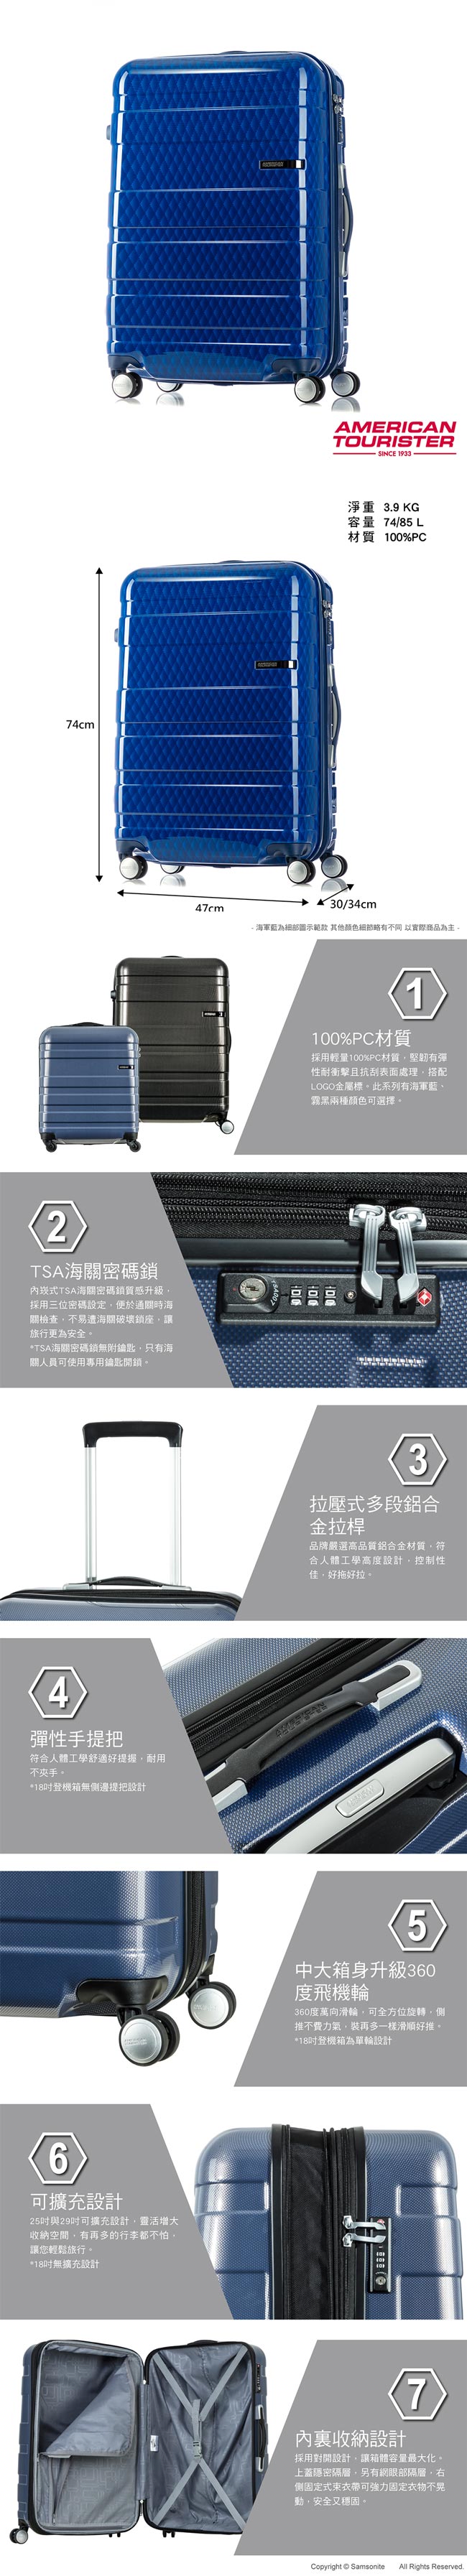 AT美國旅行者 25吋HS MV+ Deluxe時尚硬殼飛機輪TSA登機箱(幾何藍)